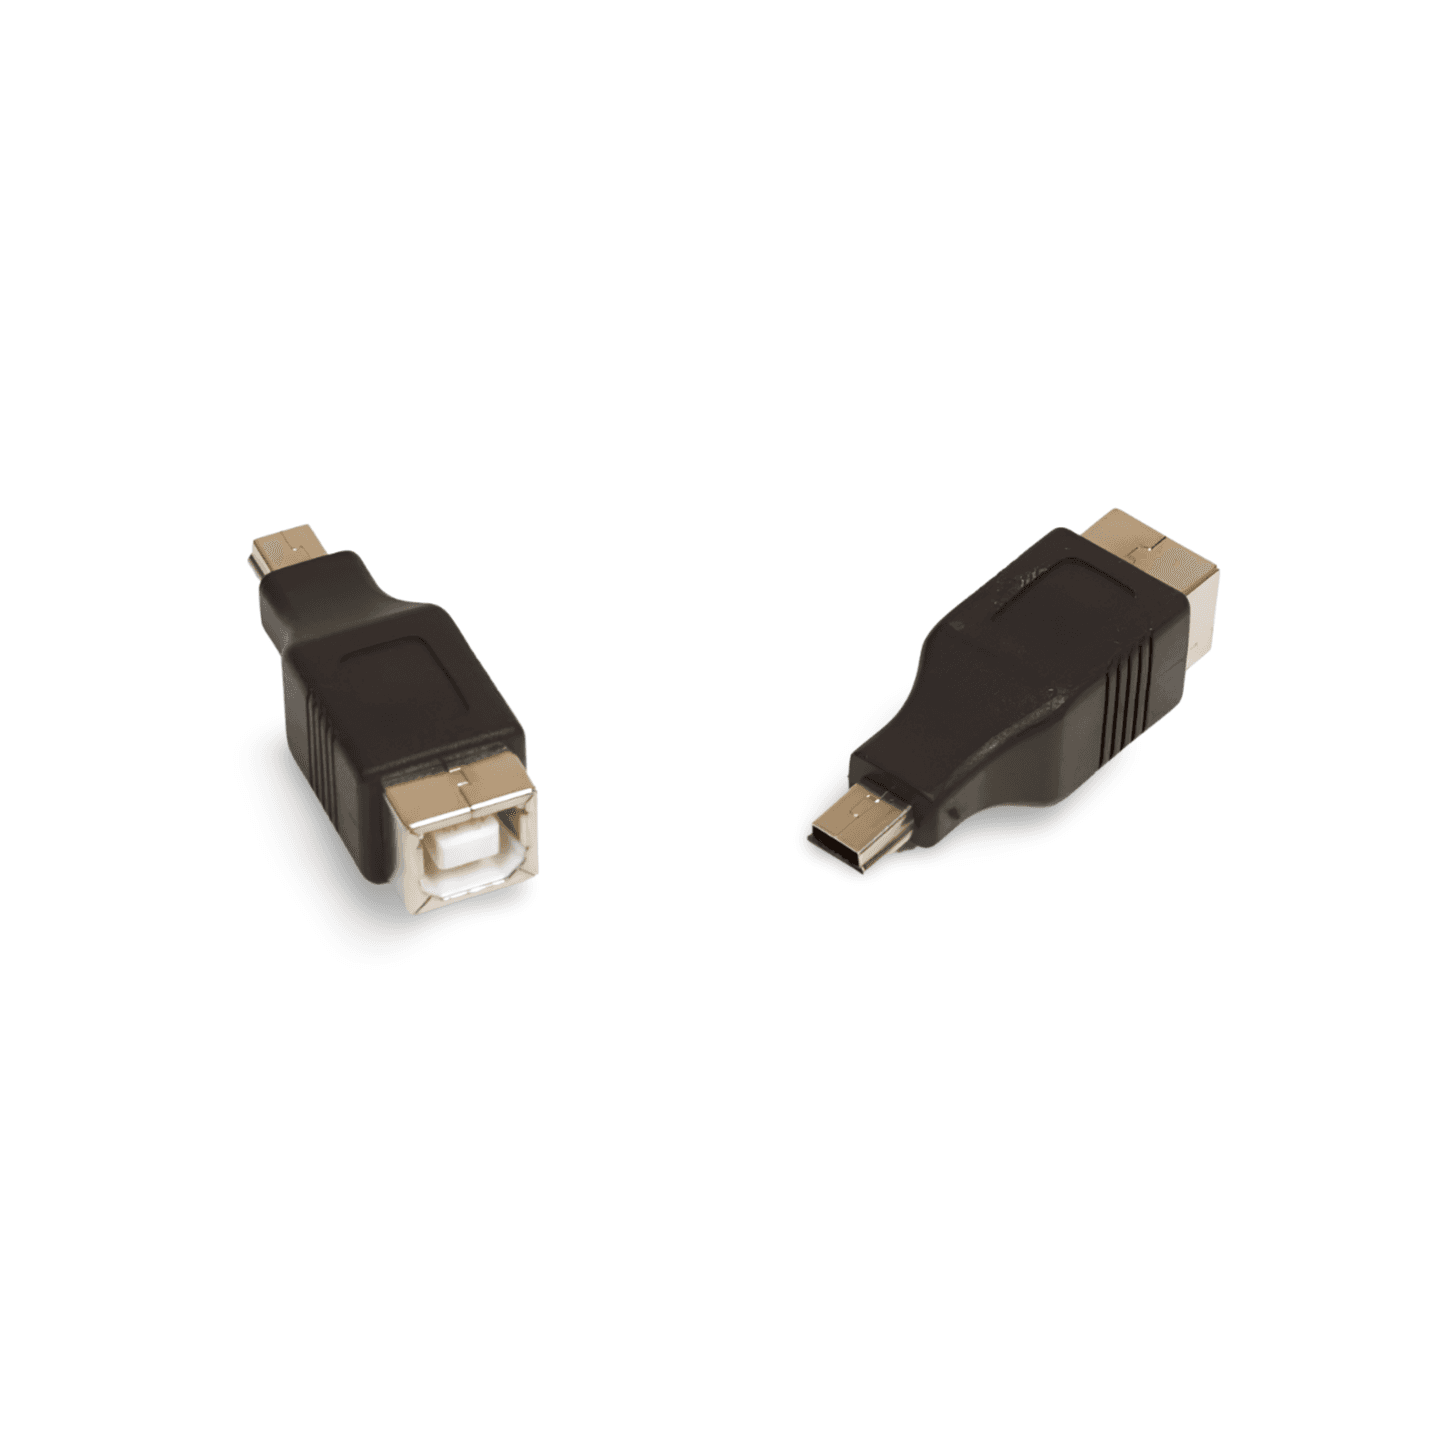 1in USB Camera Adapter Type B Female to Mini B 5 Male black